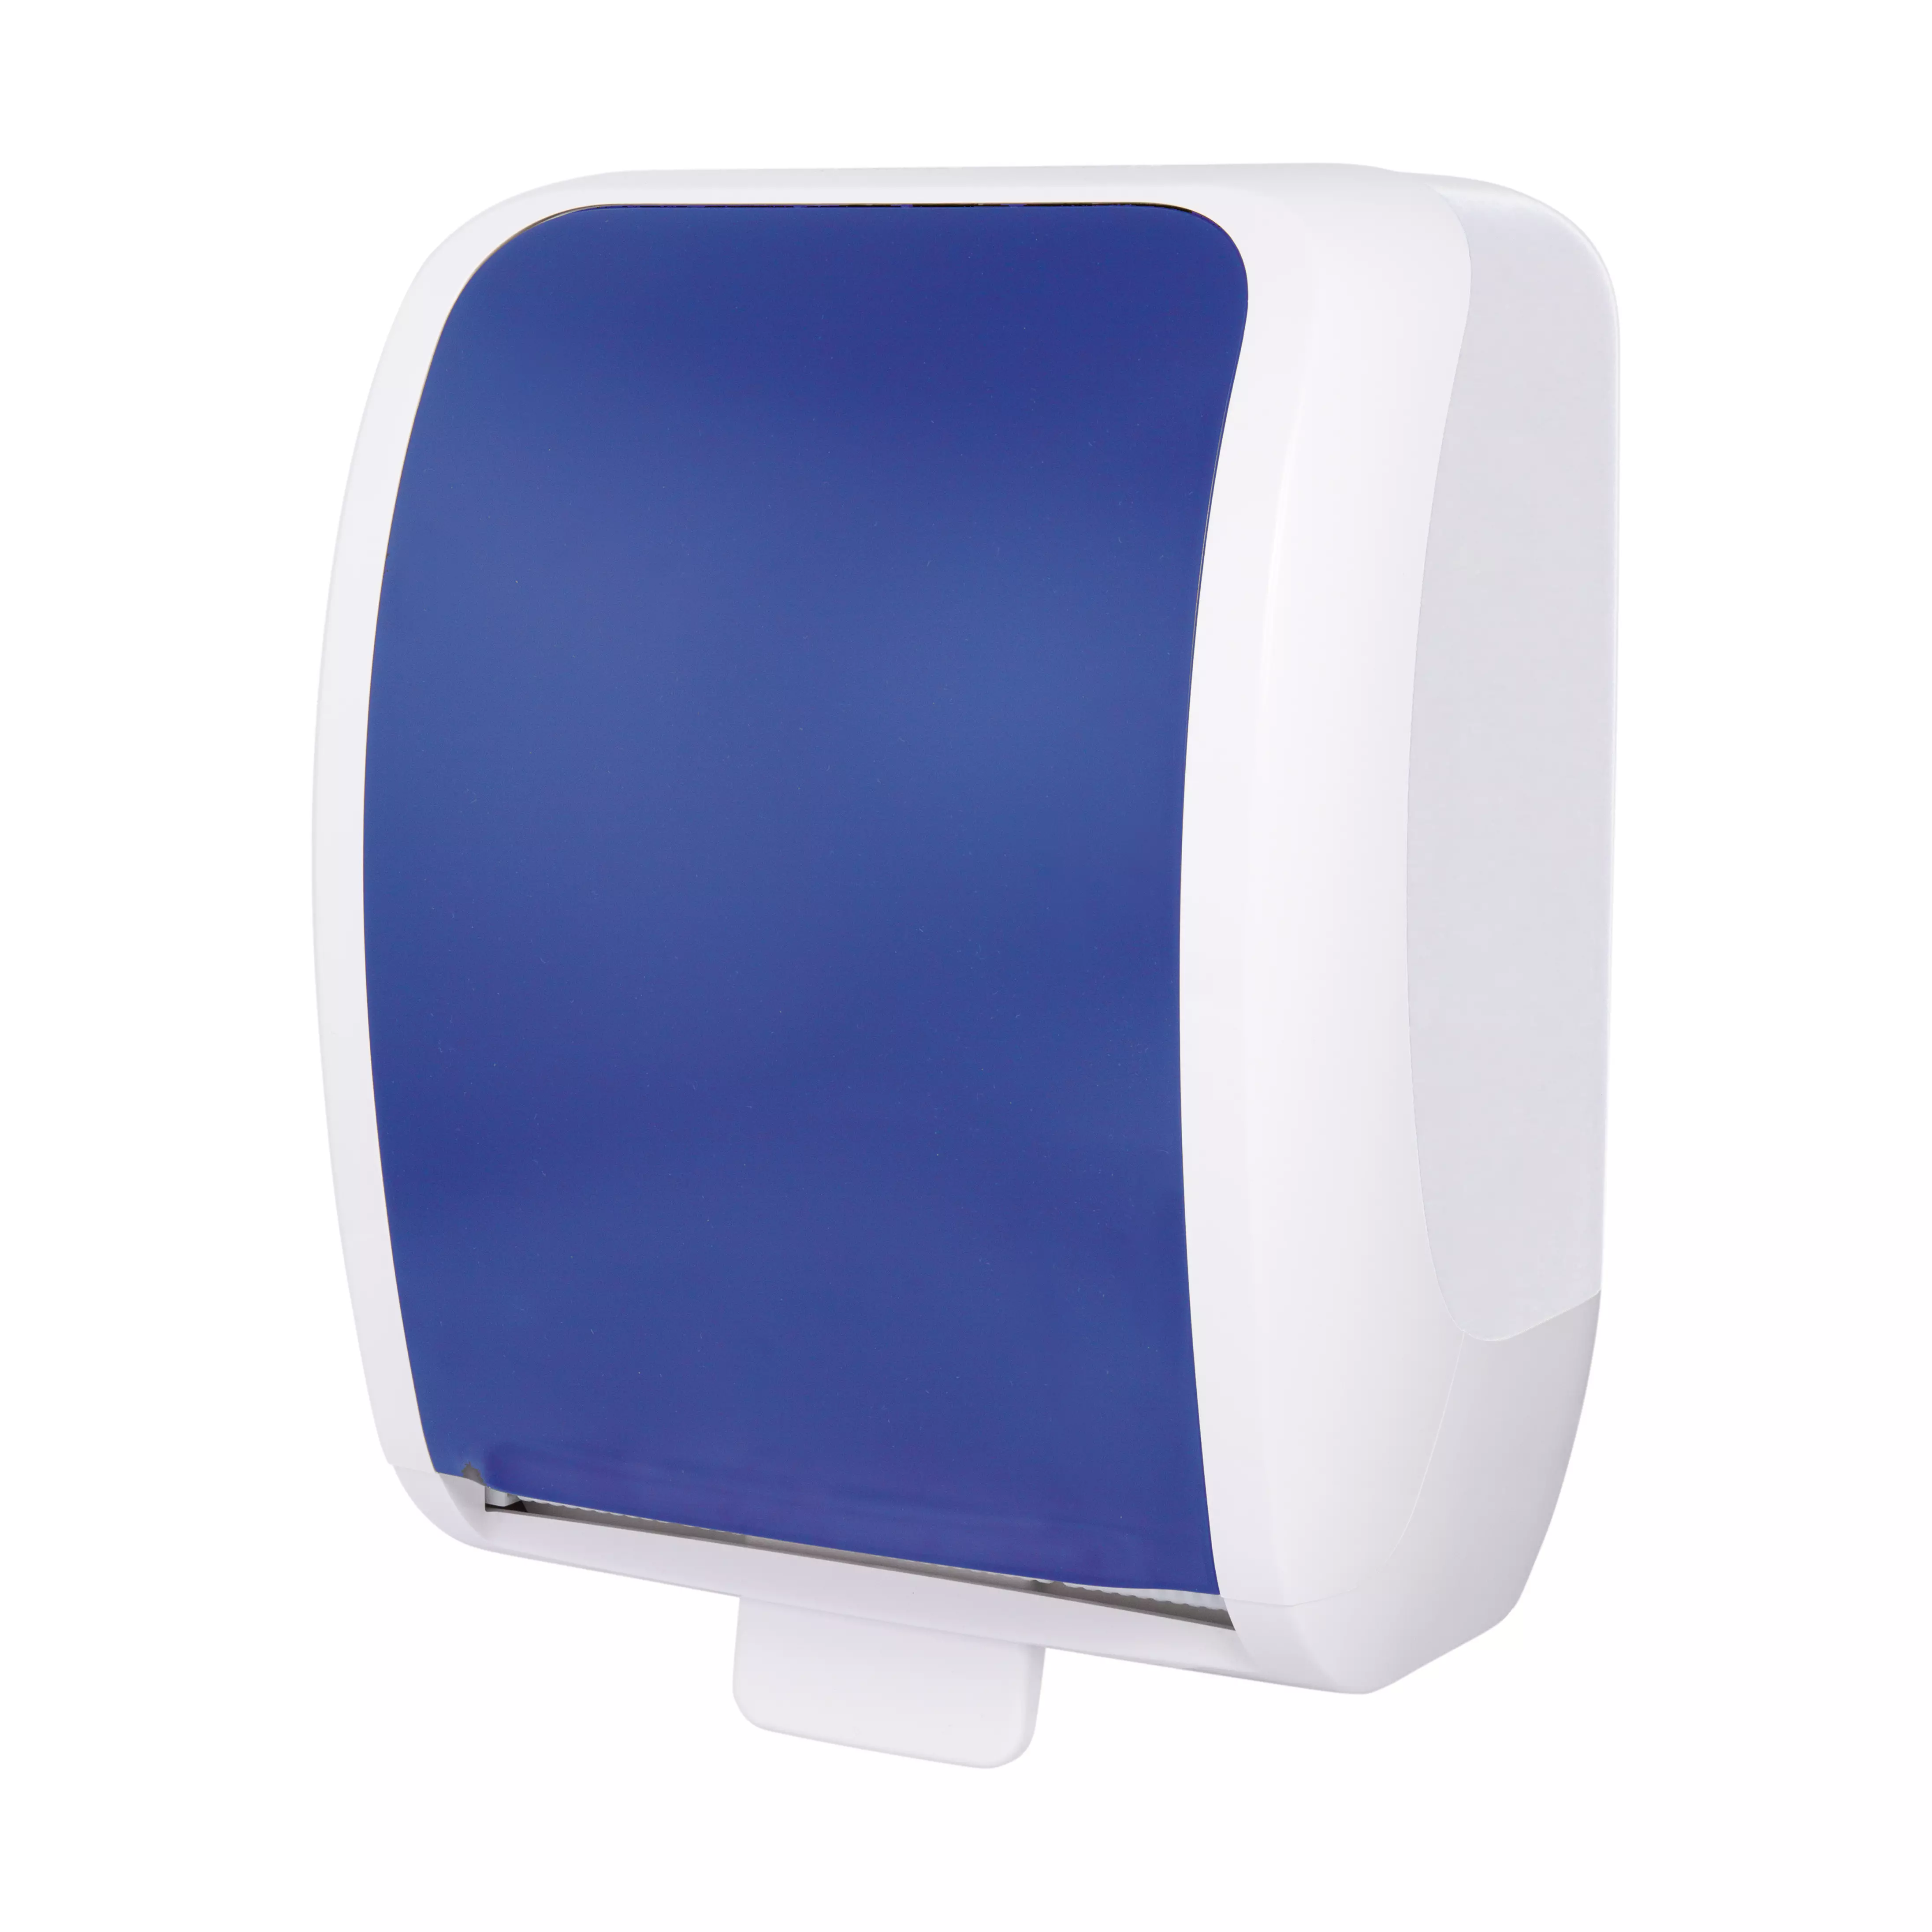 RATIO towel dispenser - blue